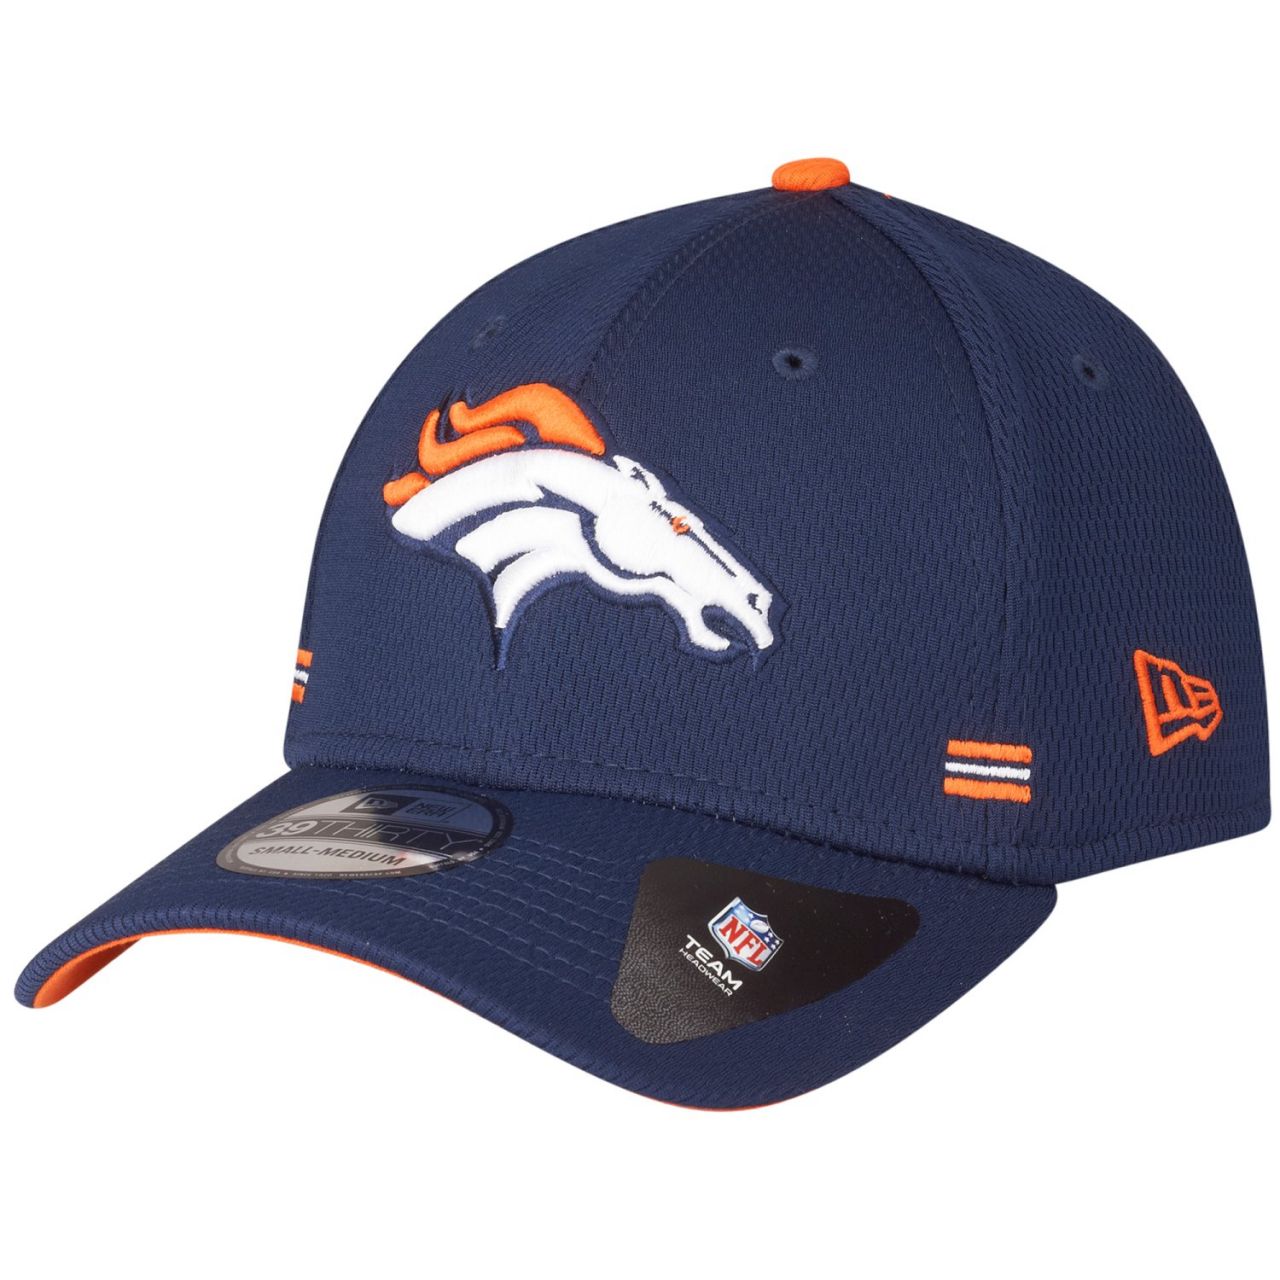 amfoo - New Era 39Thirty Cap - HOMETOWN Denver Broncos